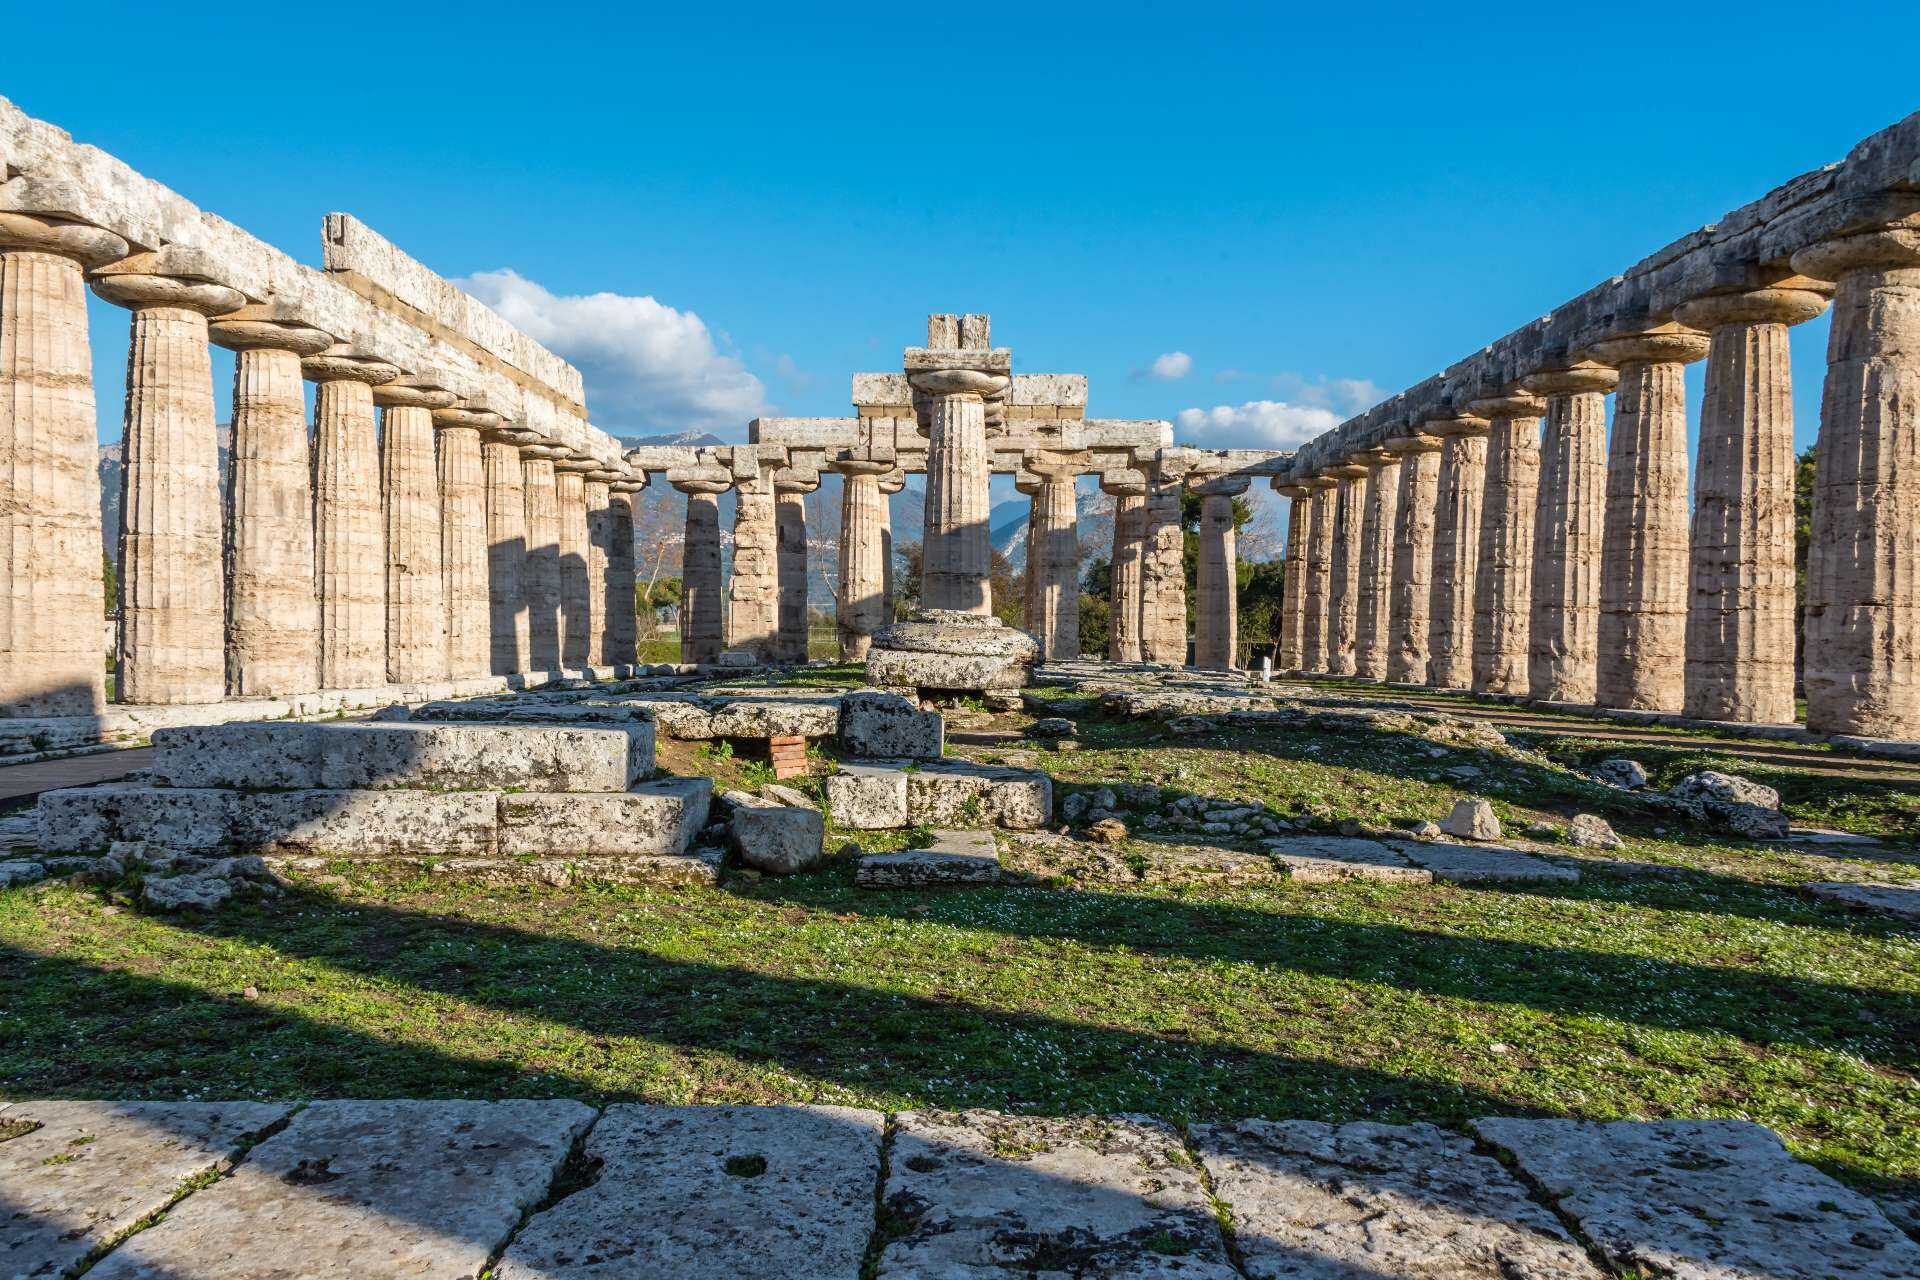 The ruins of Paestum